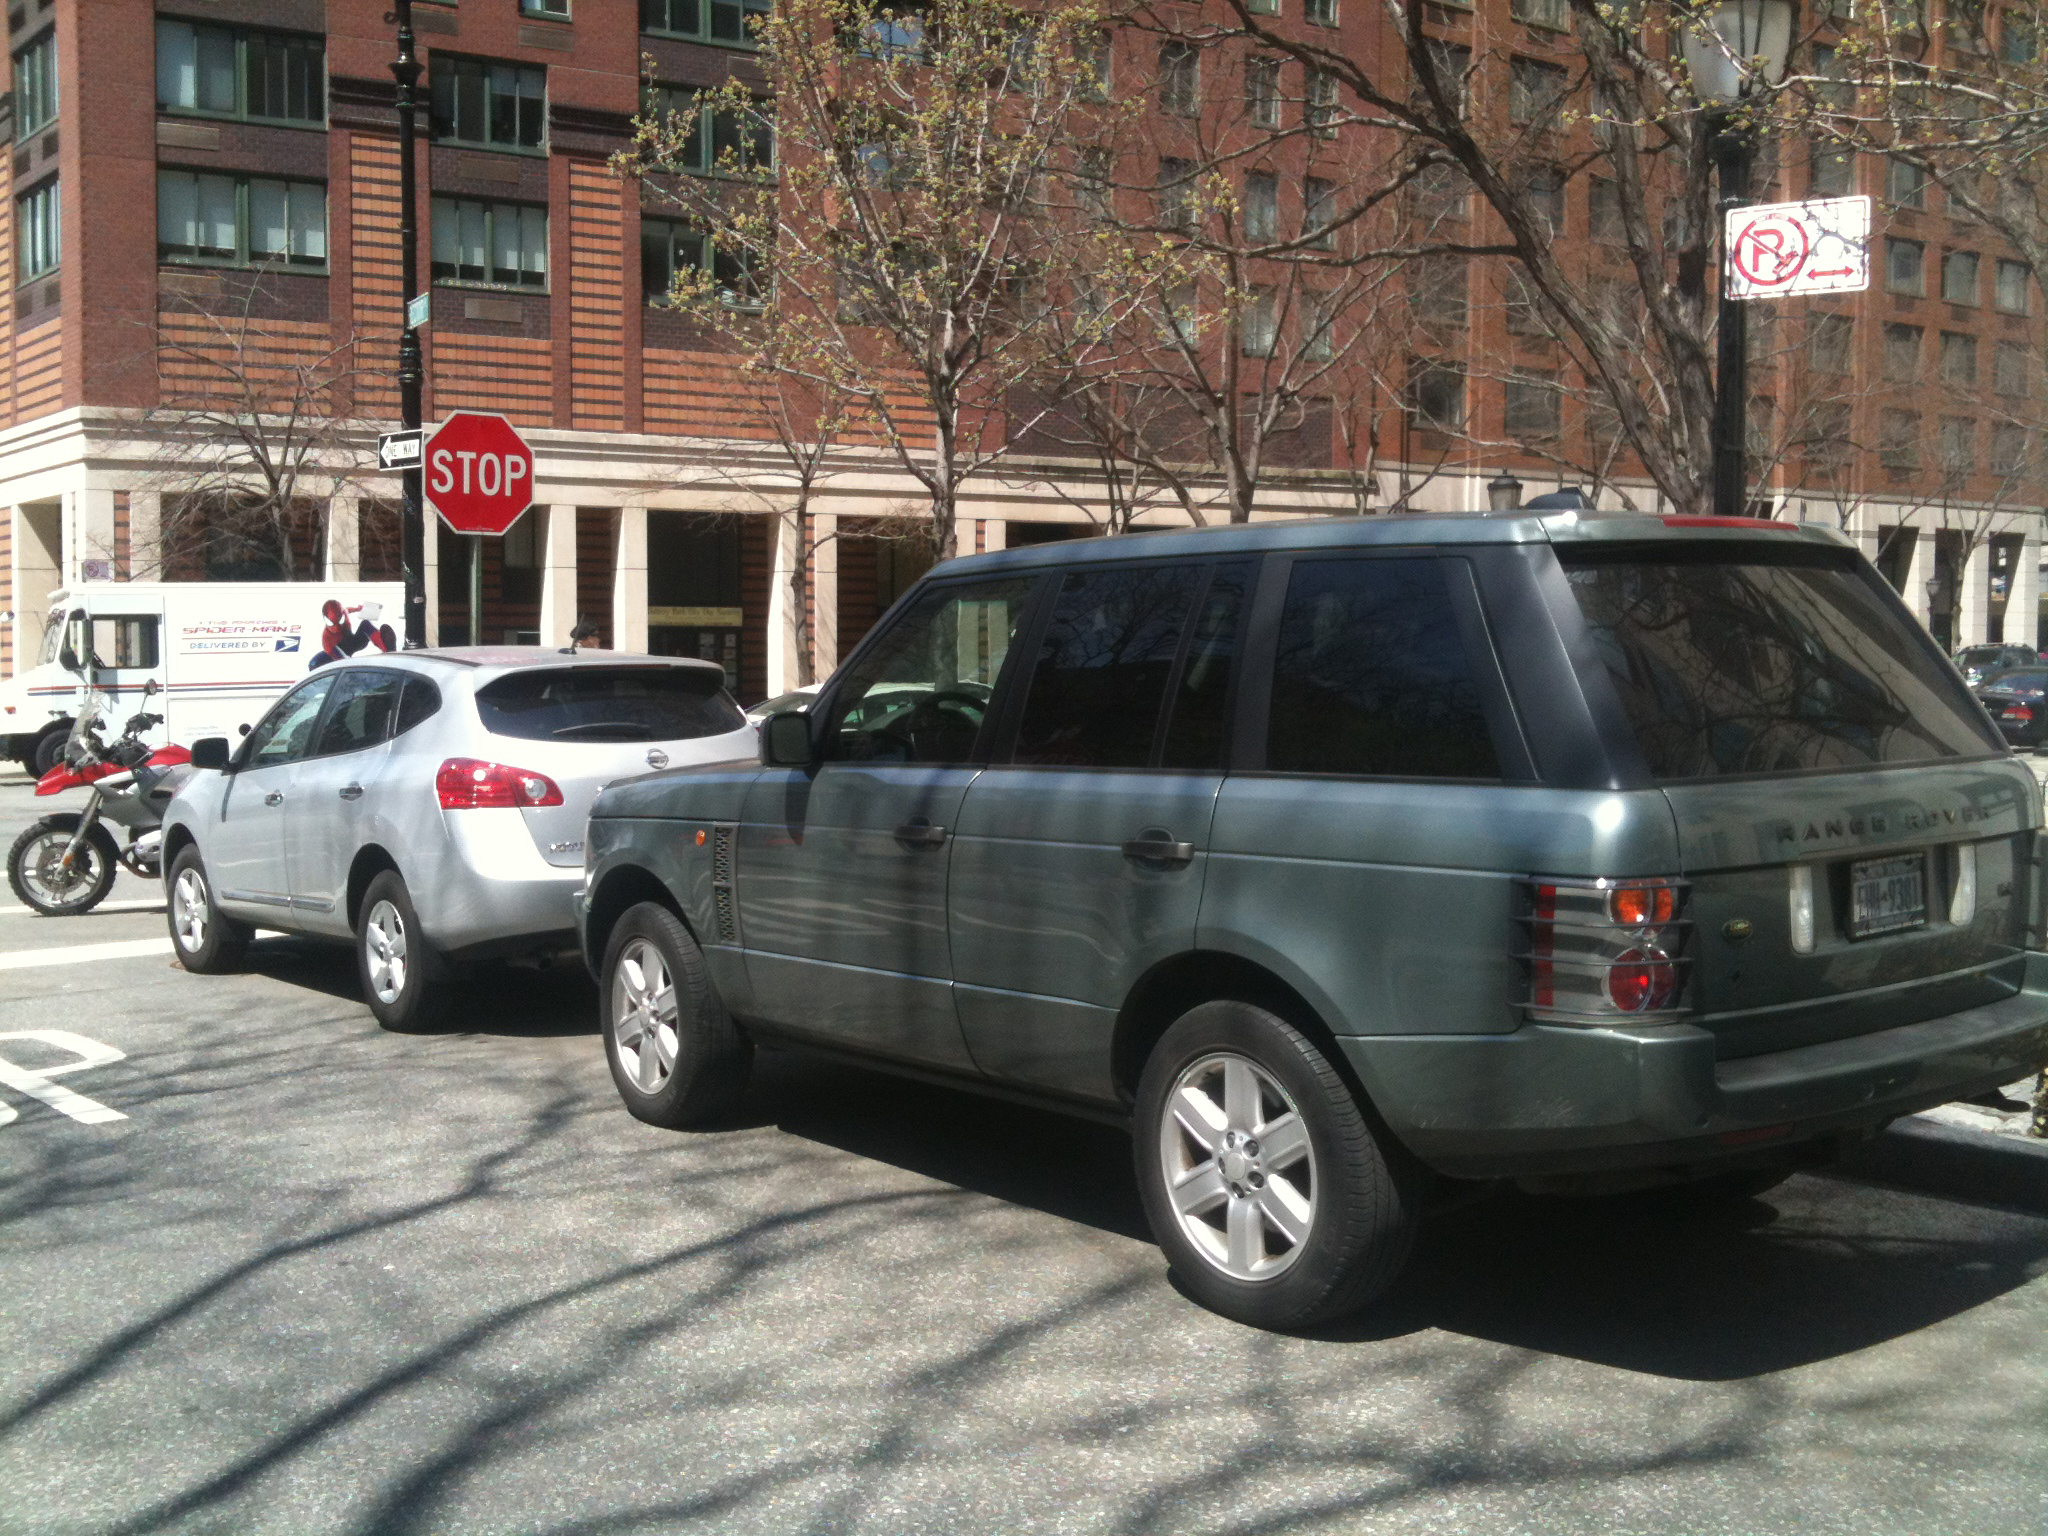 Range Rover parked